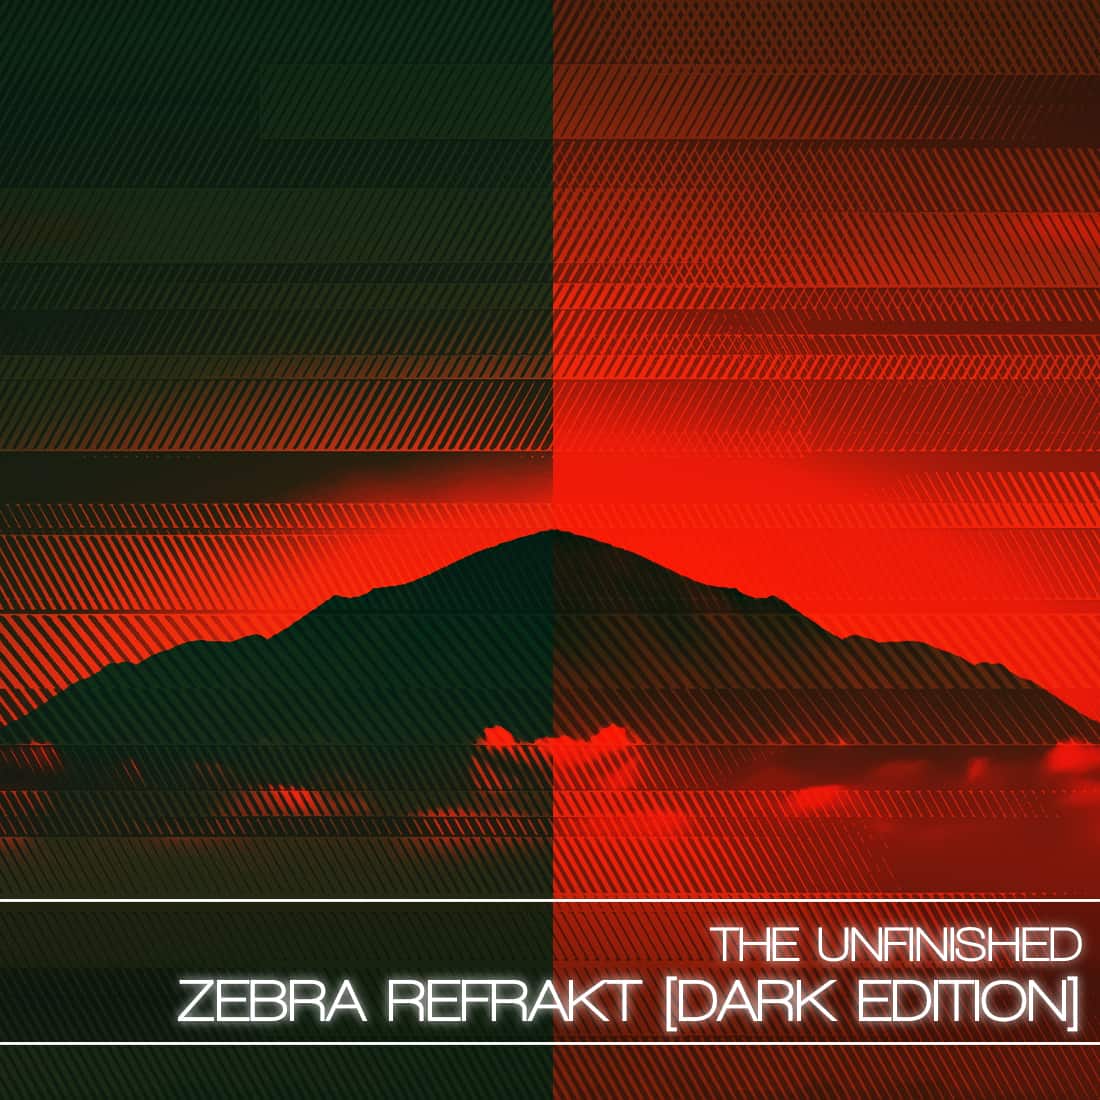 Zebra Refrakt Dark Edition by The Unfinished